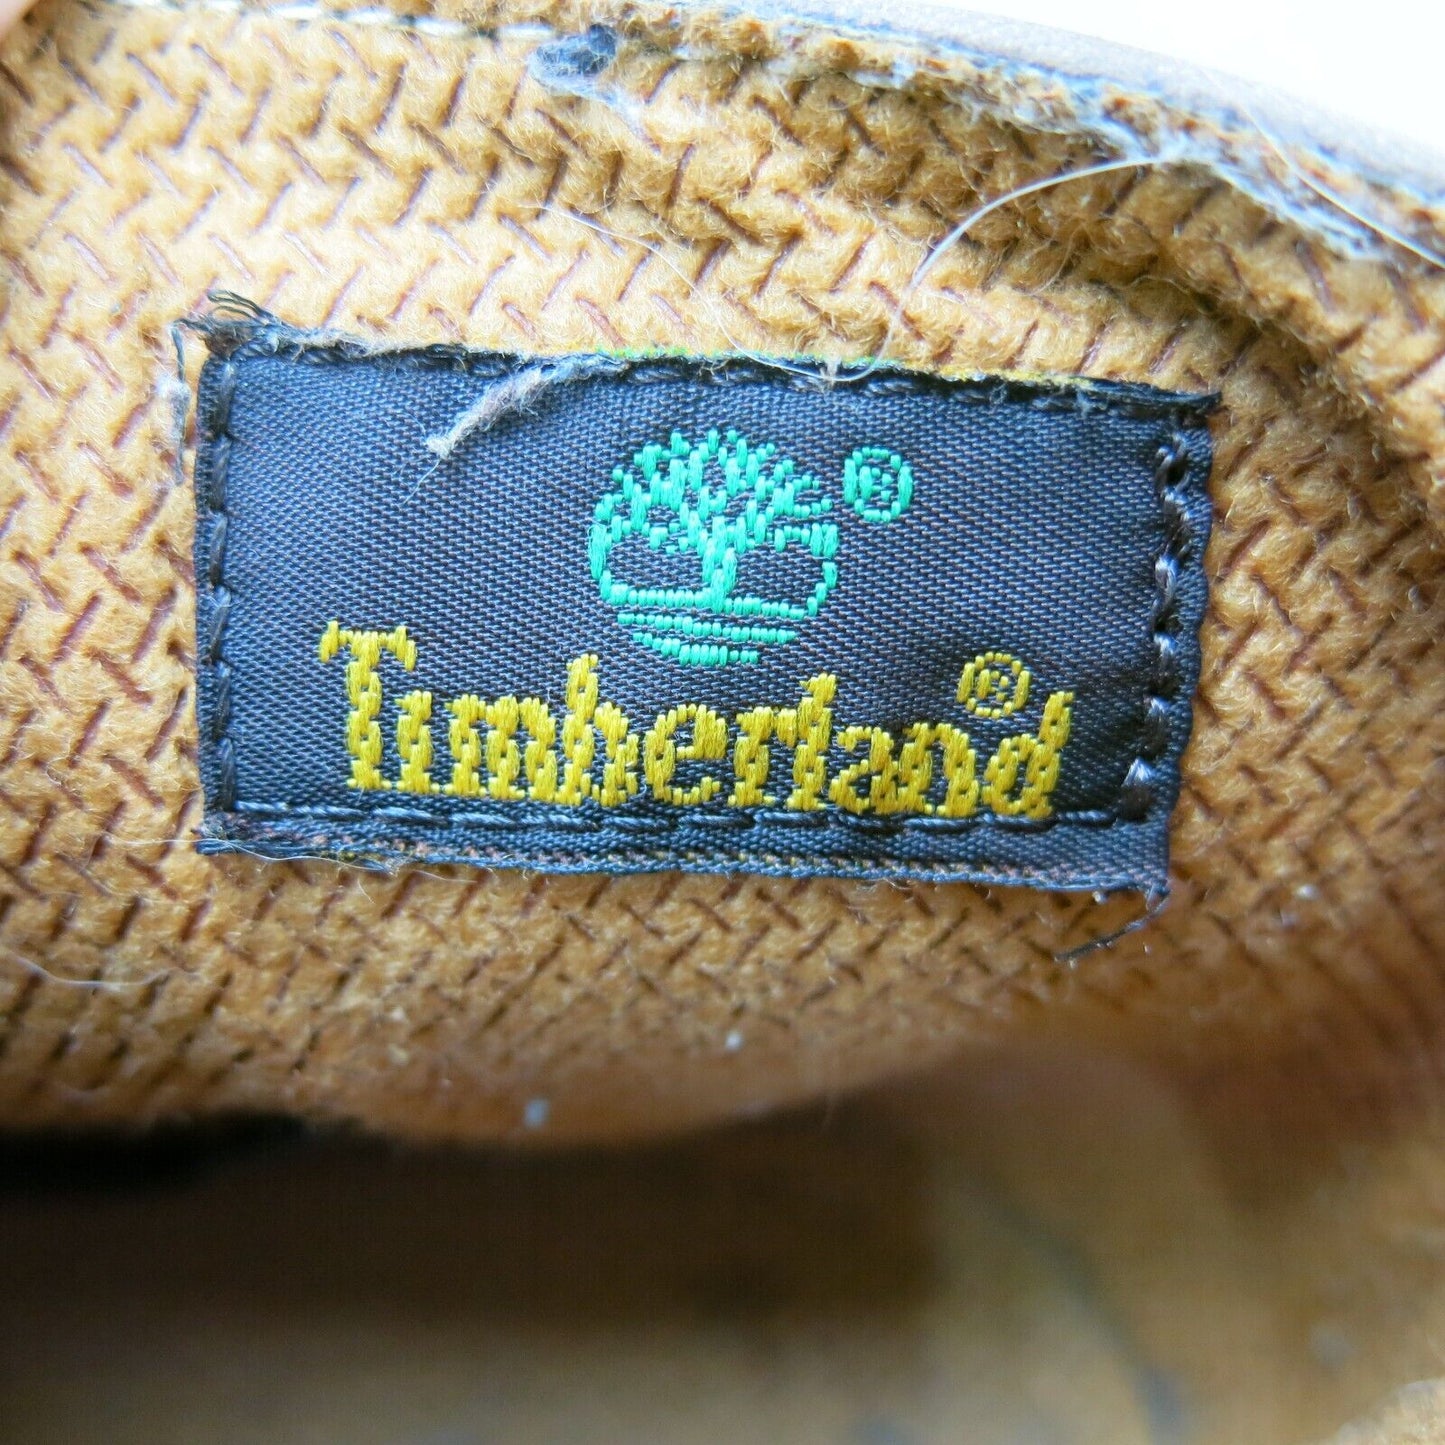 Timberland Mens Waterproof Low Chukka Boots Genuine Leather Tan Round Toe US 7M